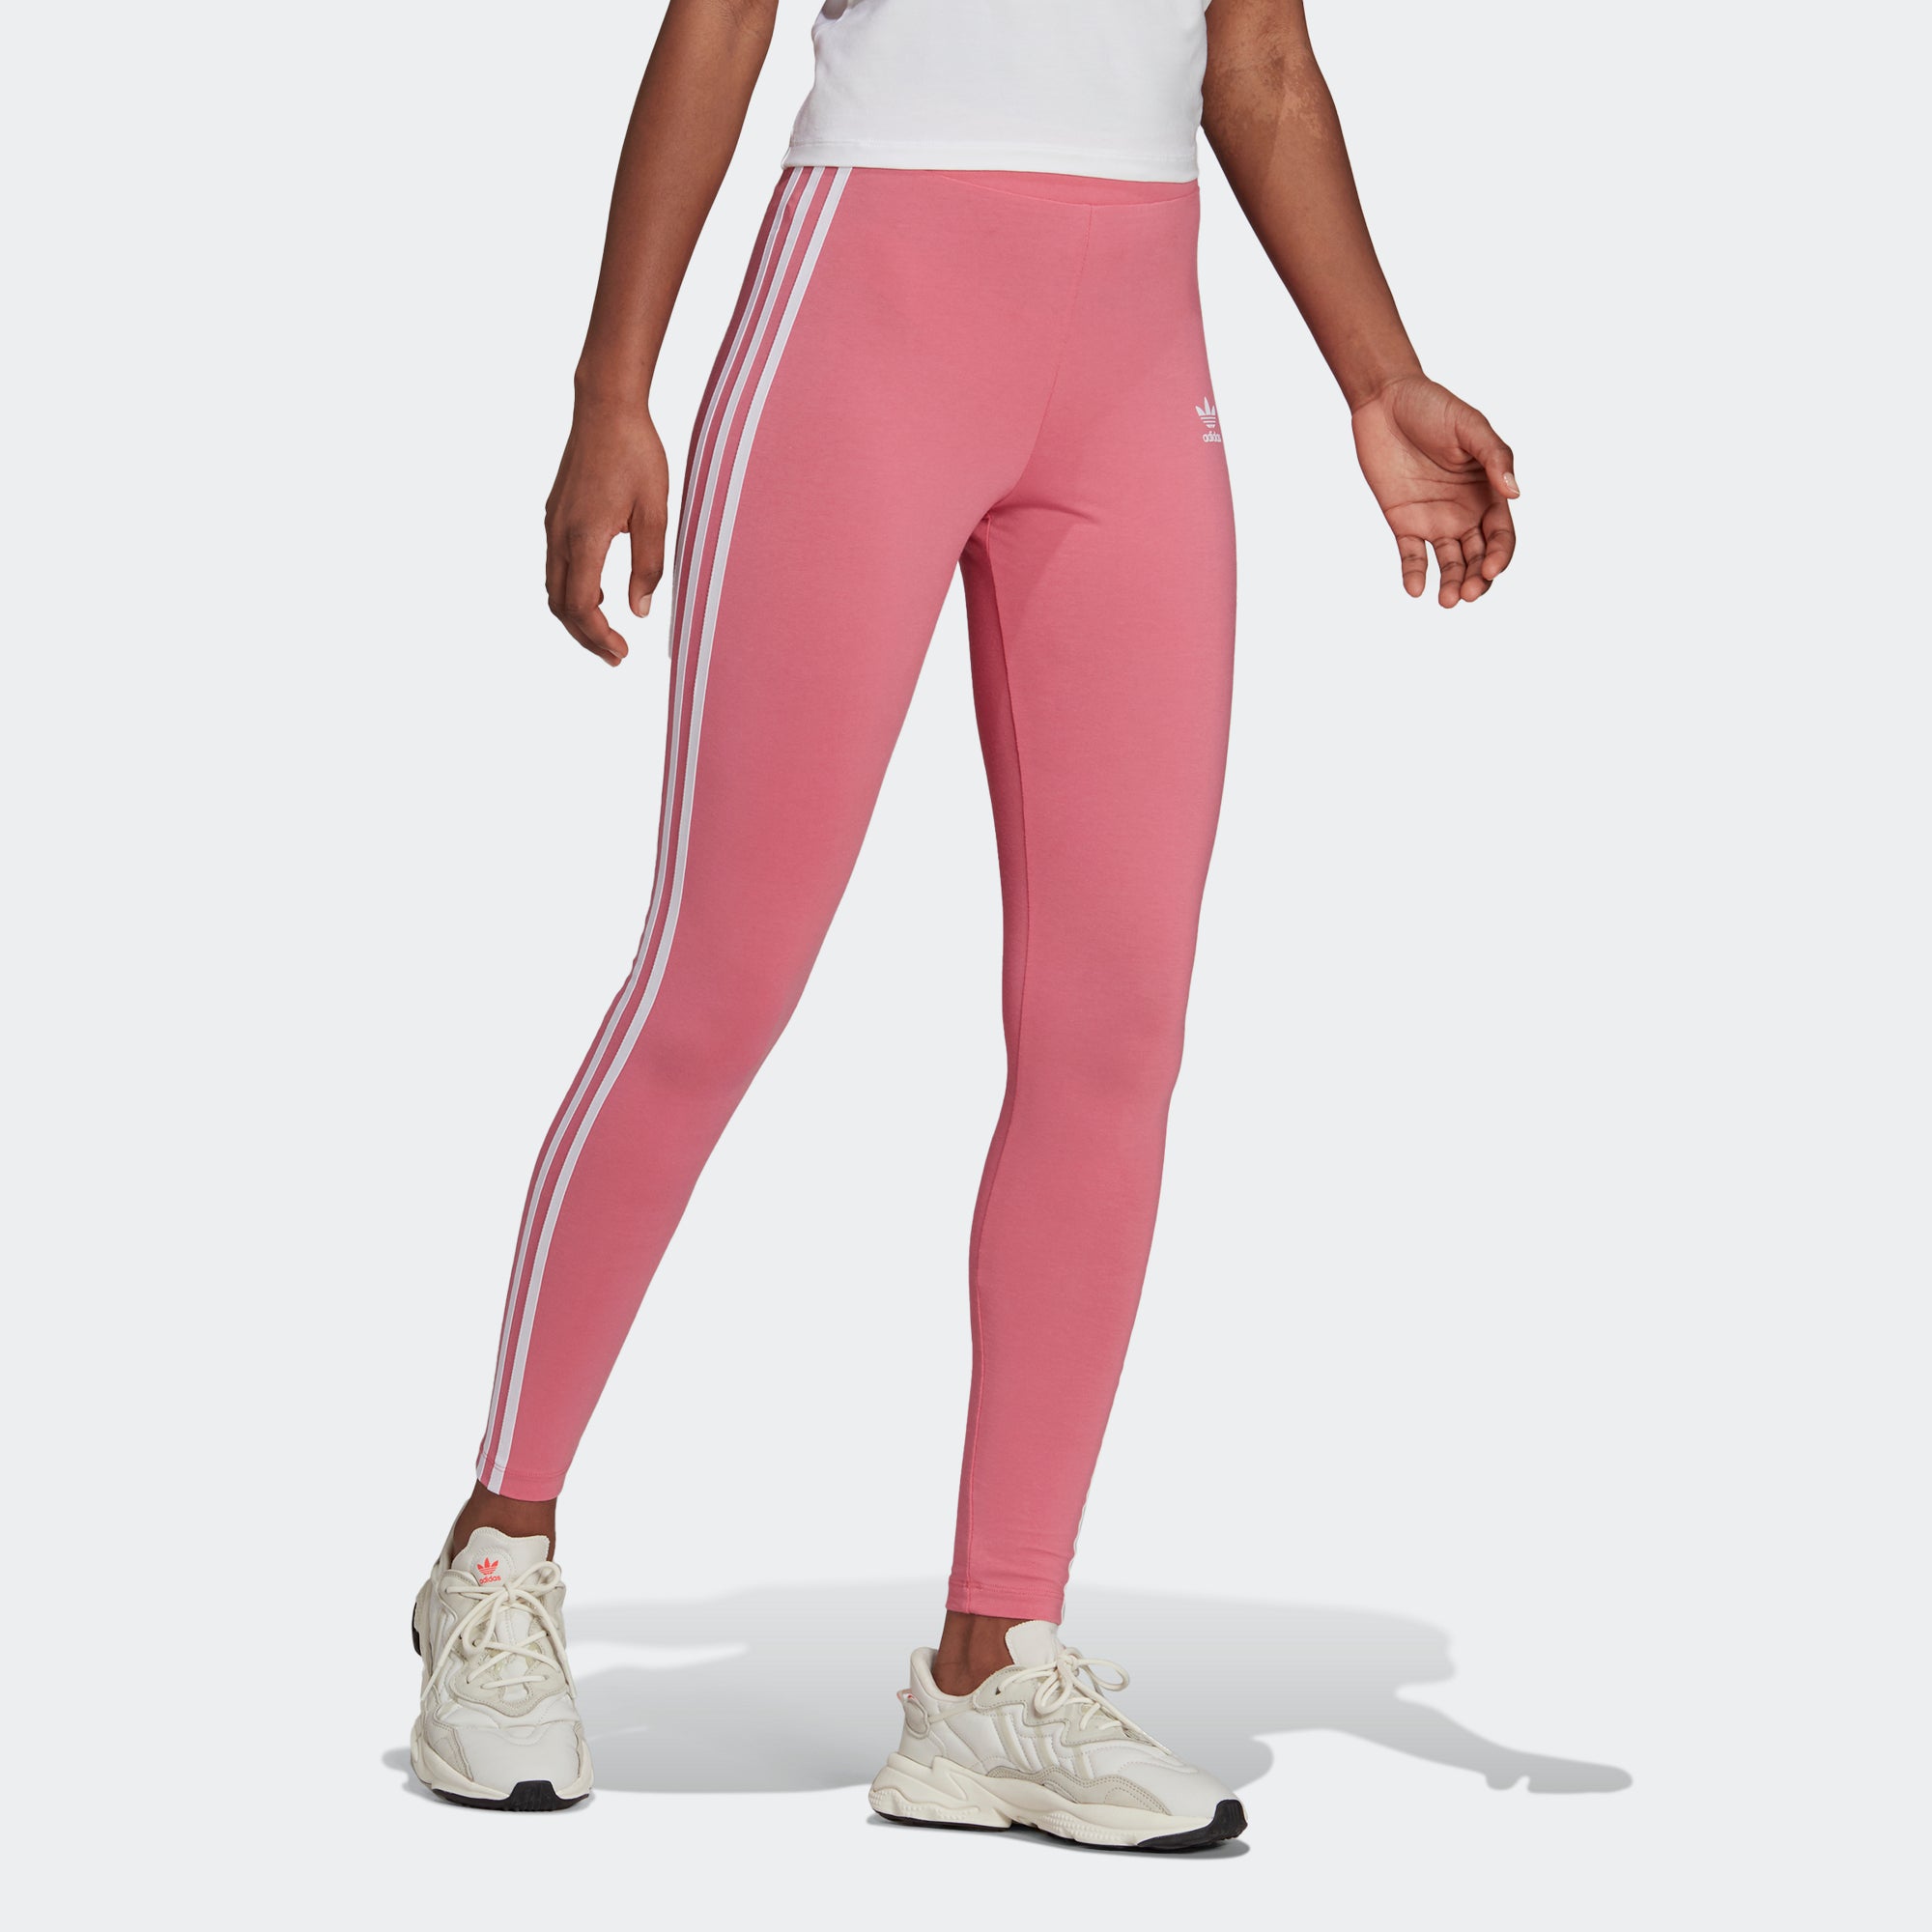 GetUSCart- adidas Originals Women's 3-Stripes Leggings, Ash Pink, XL